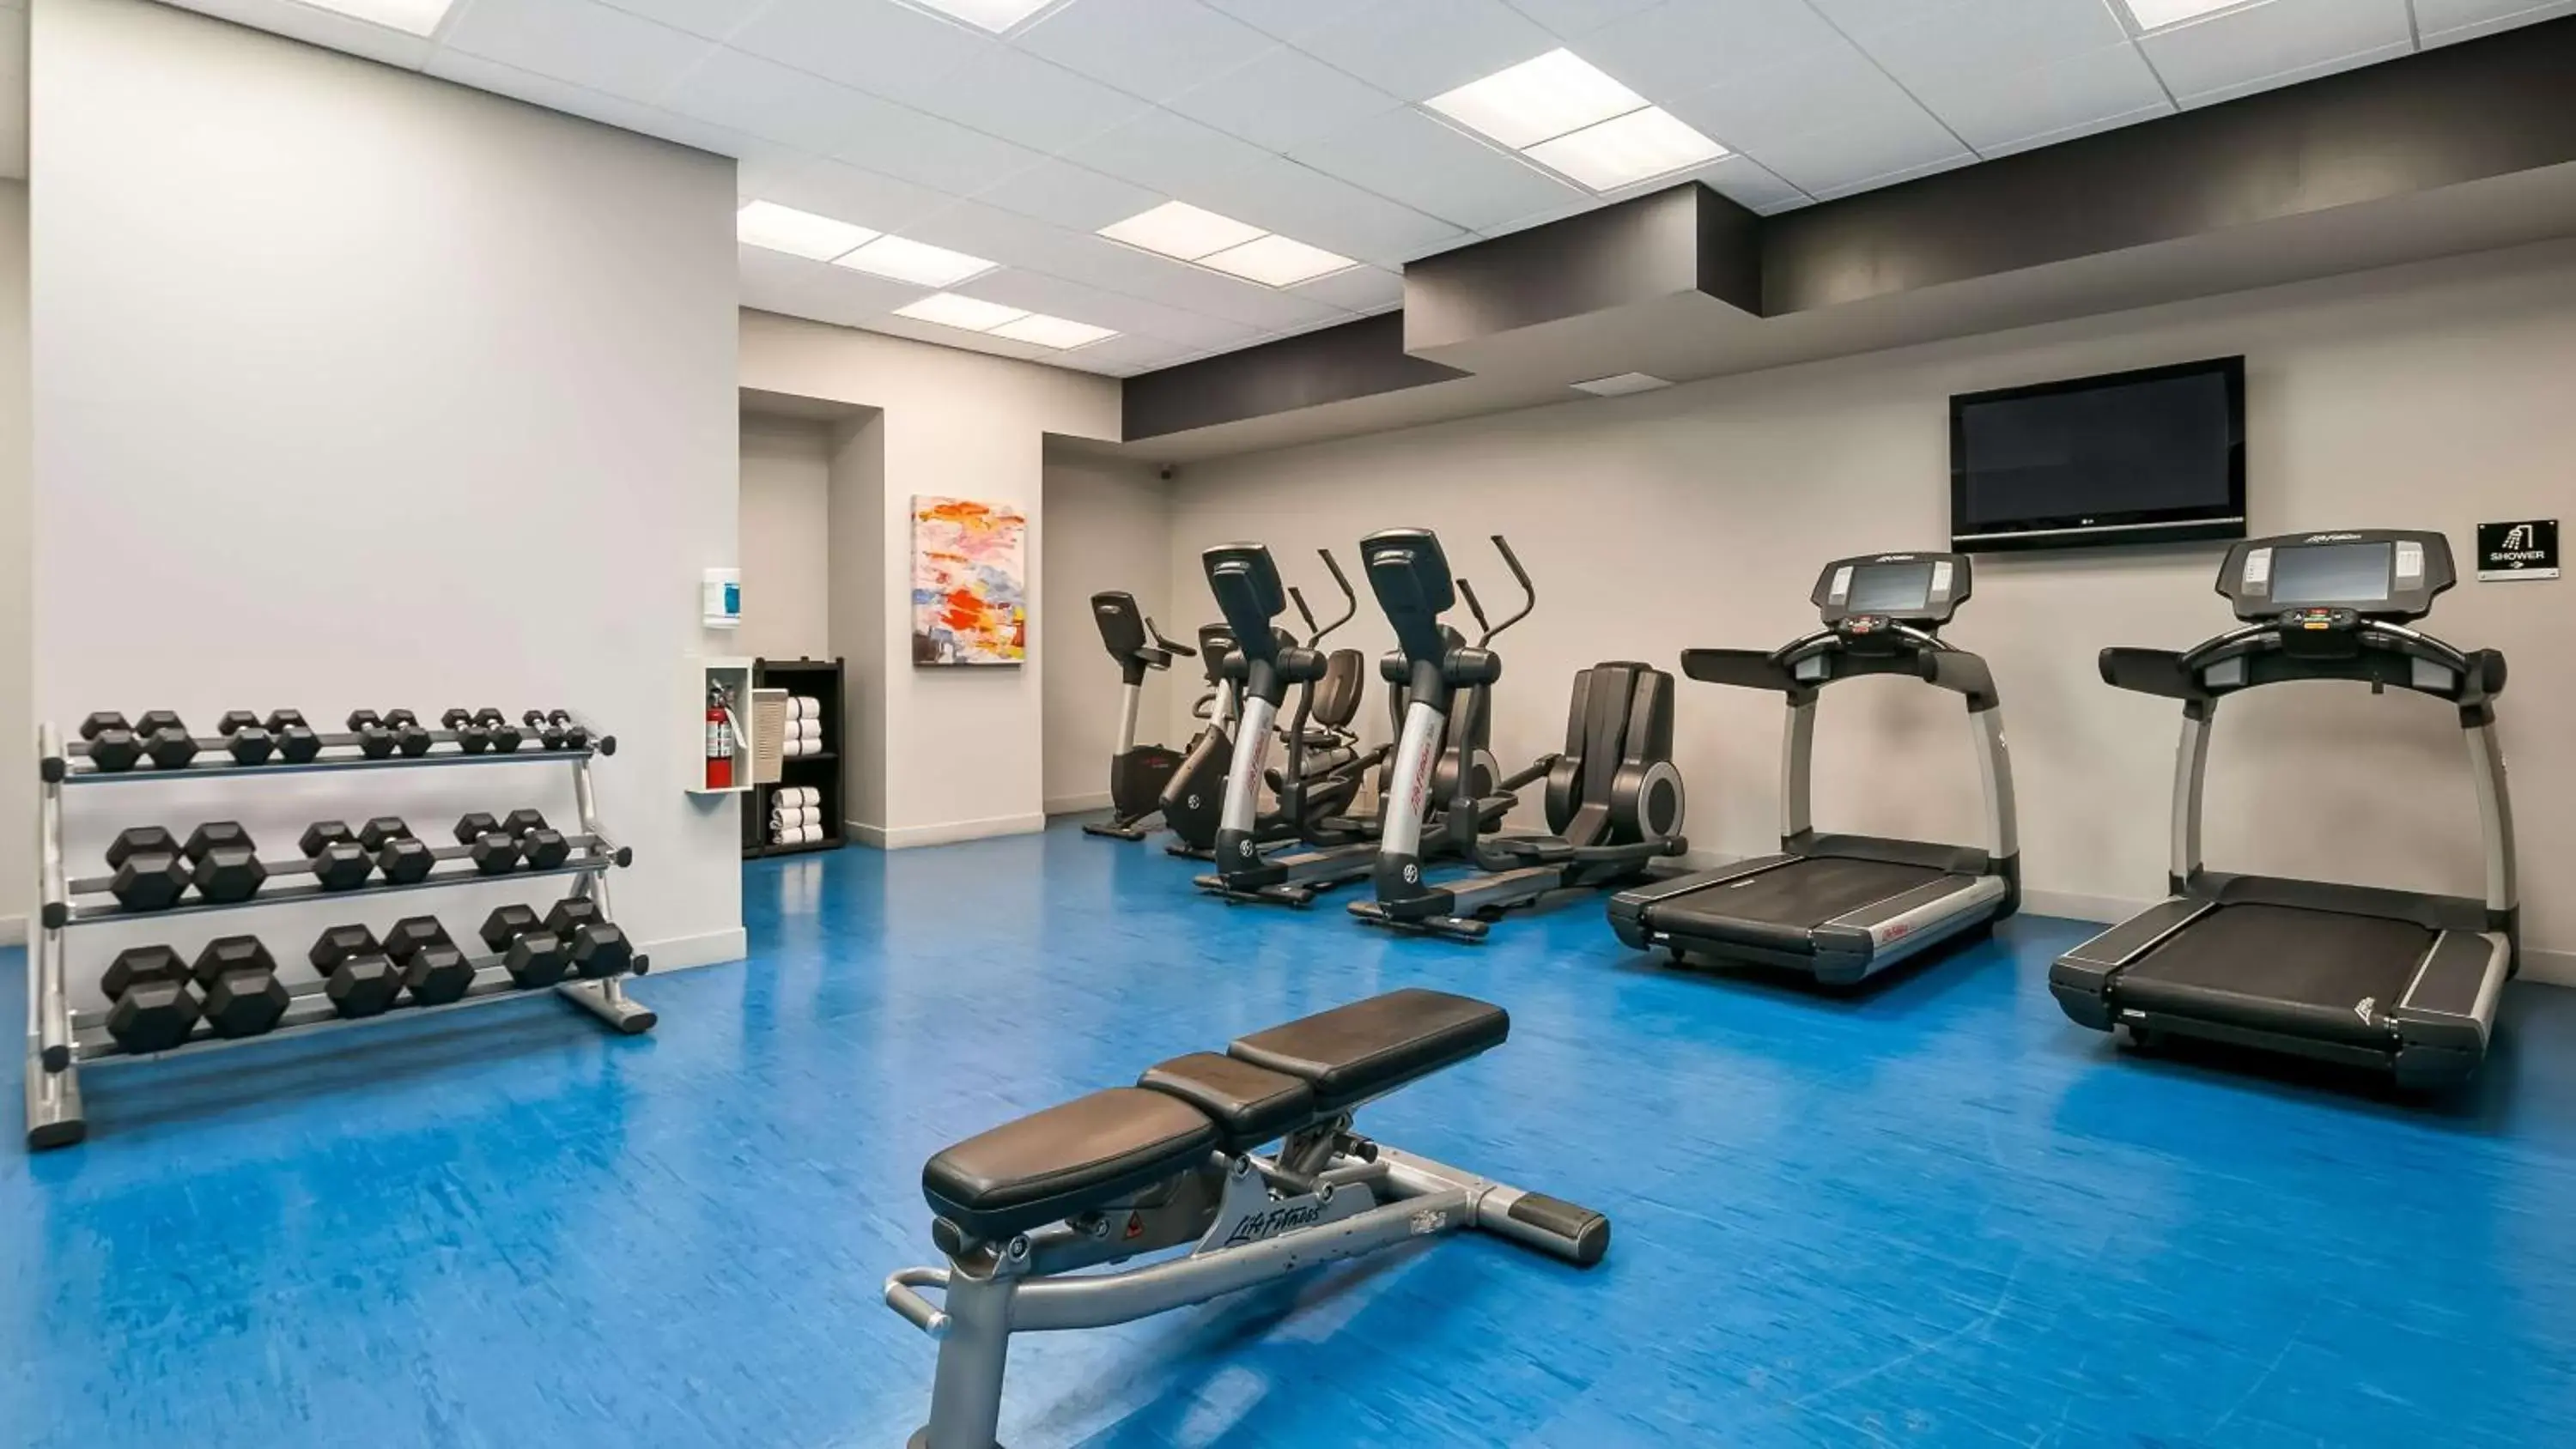 Fitness centre/facilities, Fitness Center/Facilities in Best Western Plus Village Park Inn